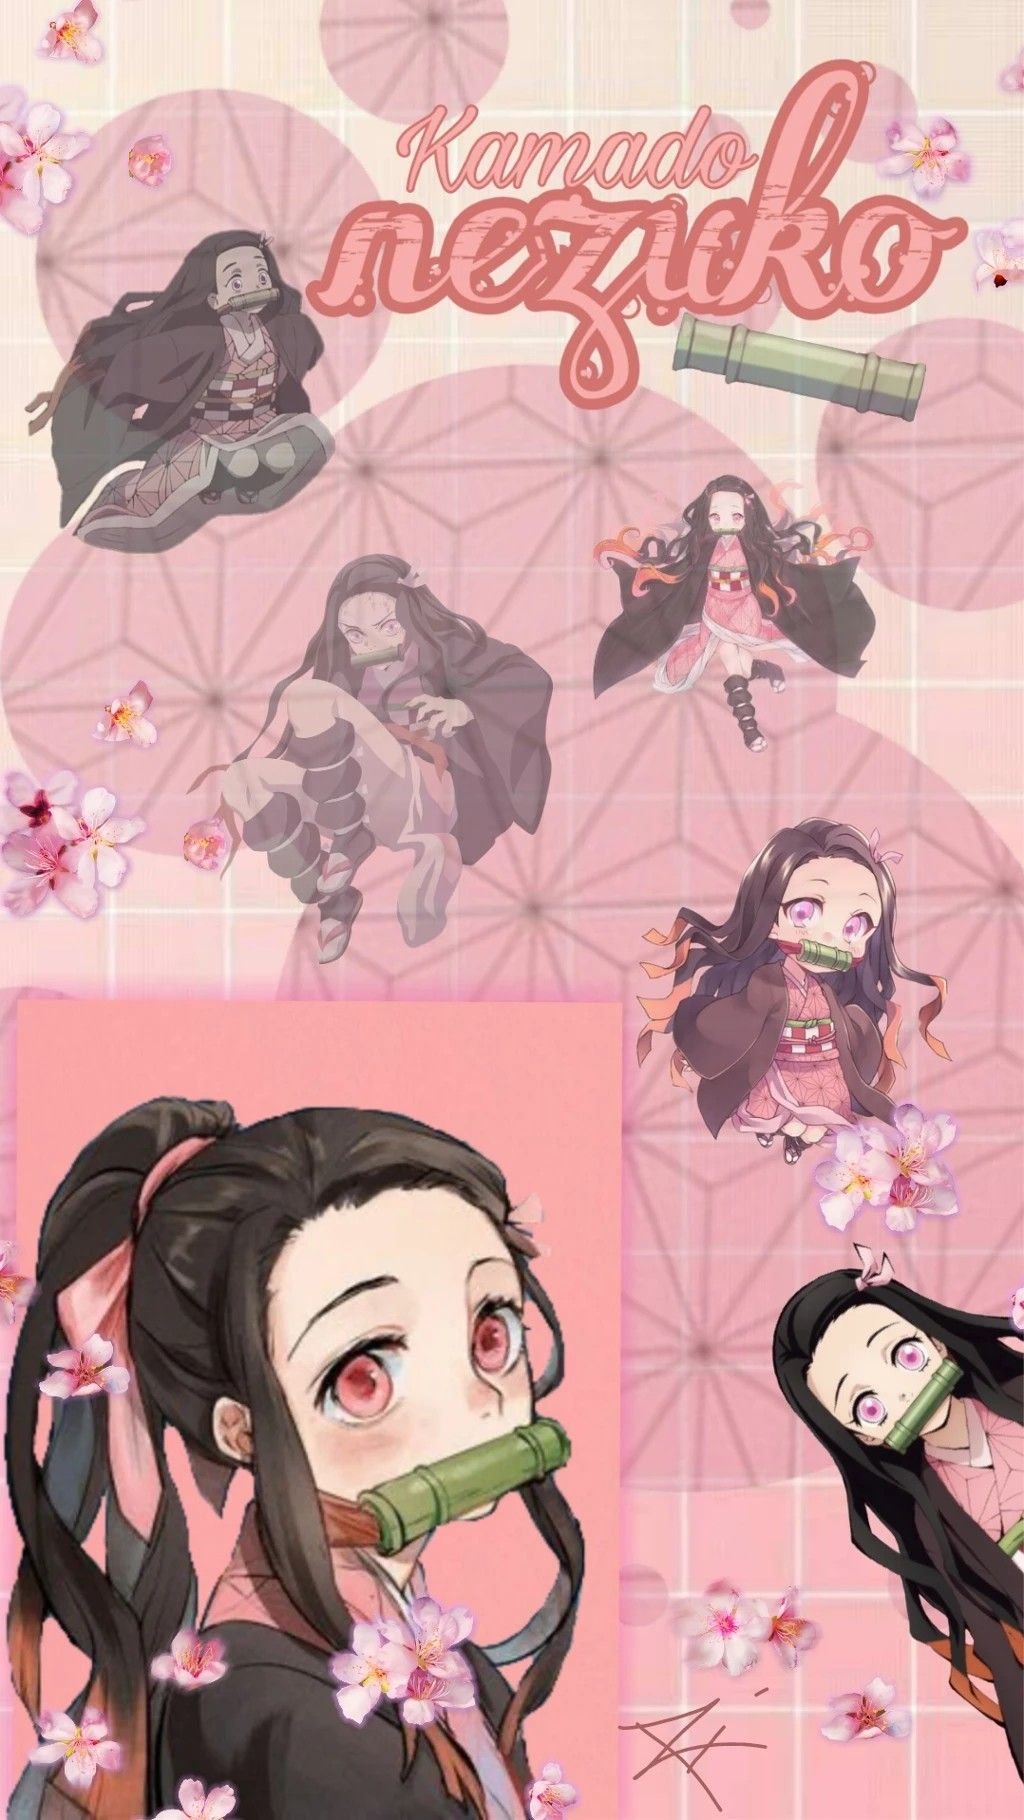 Nezuko Wallpaper HD - Demon Slayer Wallpaper for Phone